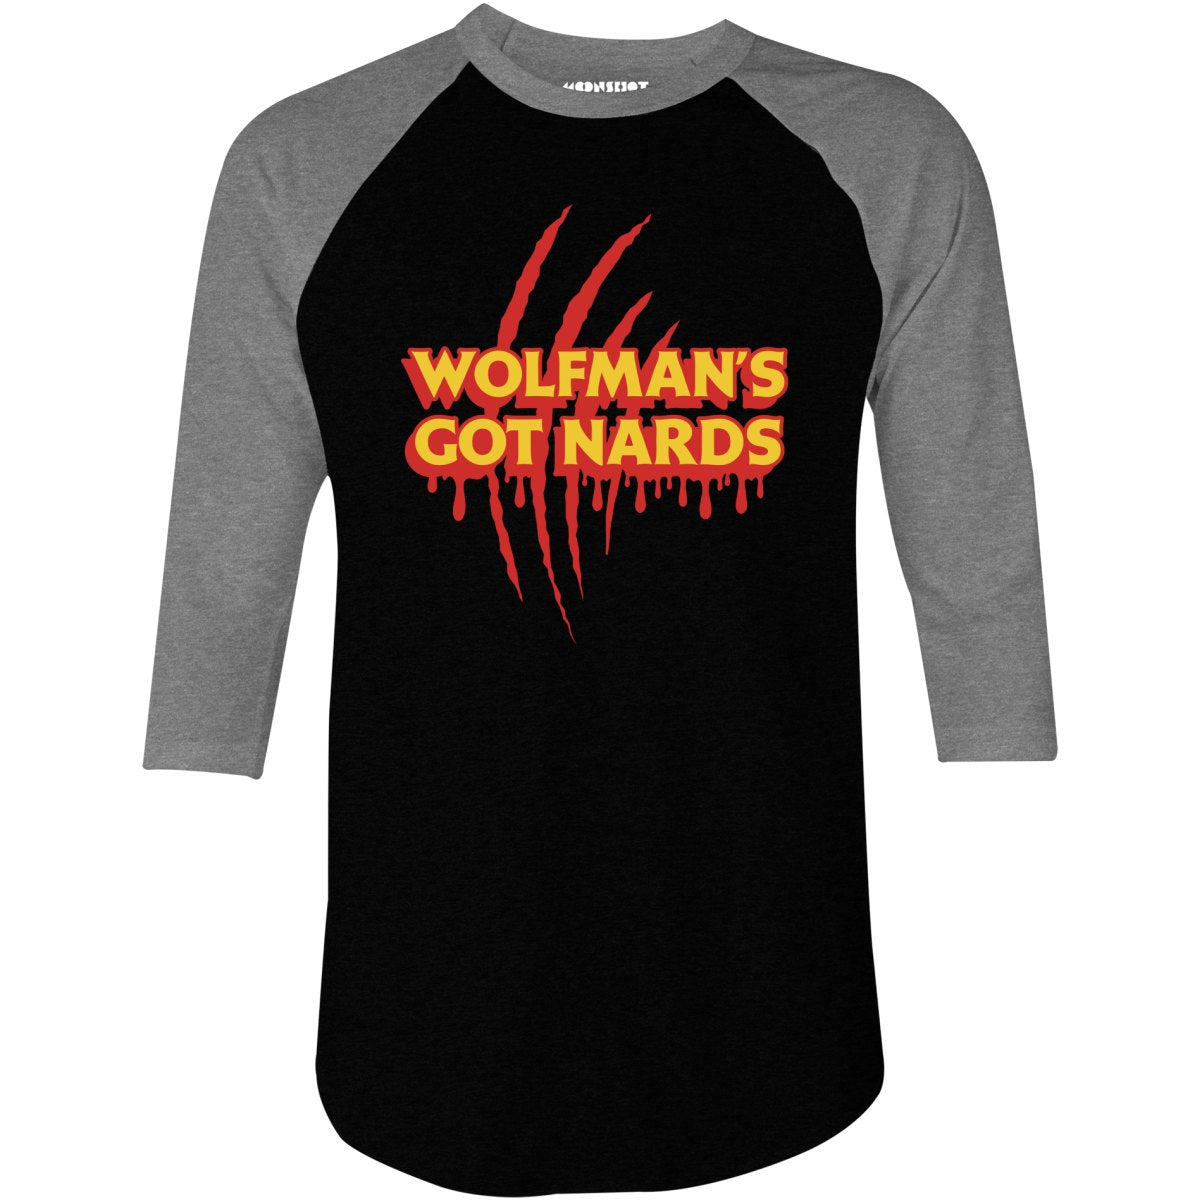 Wolfman's Got Nards - 3/4 Sleeve Raglan T-Shirt